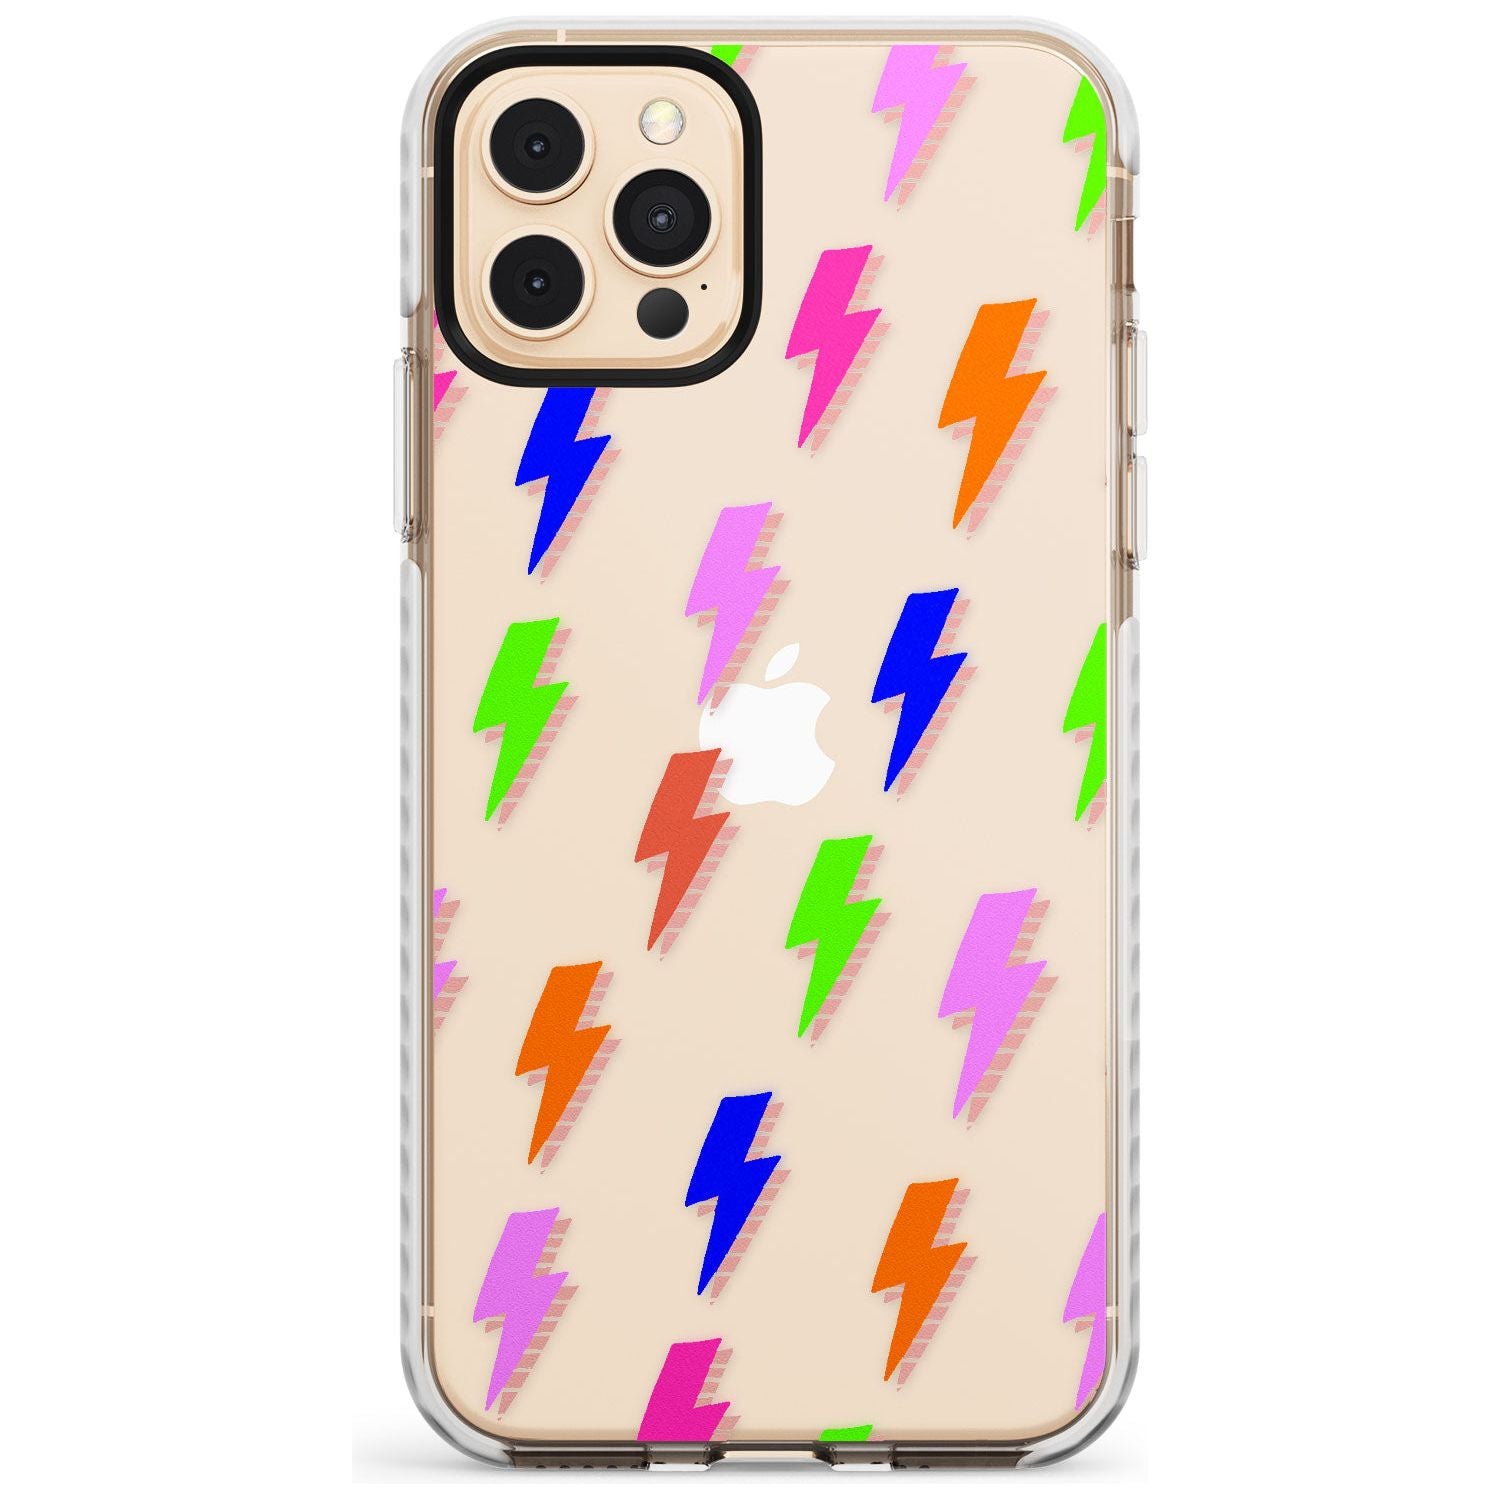 Rainbow Pop Lightning Slim TPU Phone Case for iPhone 11 Pro Max